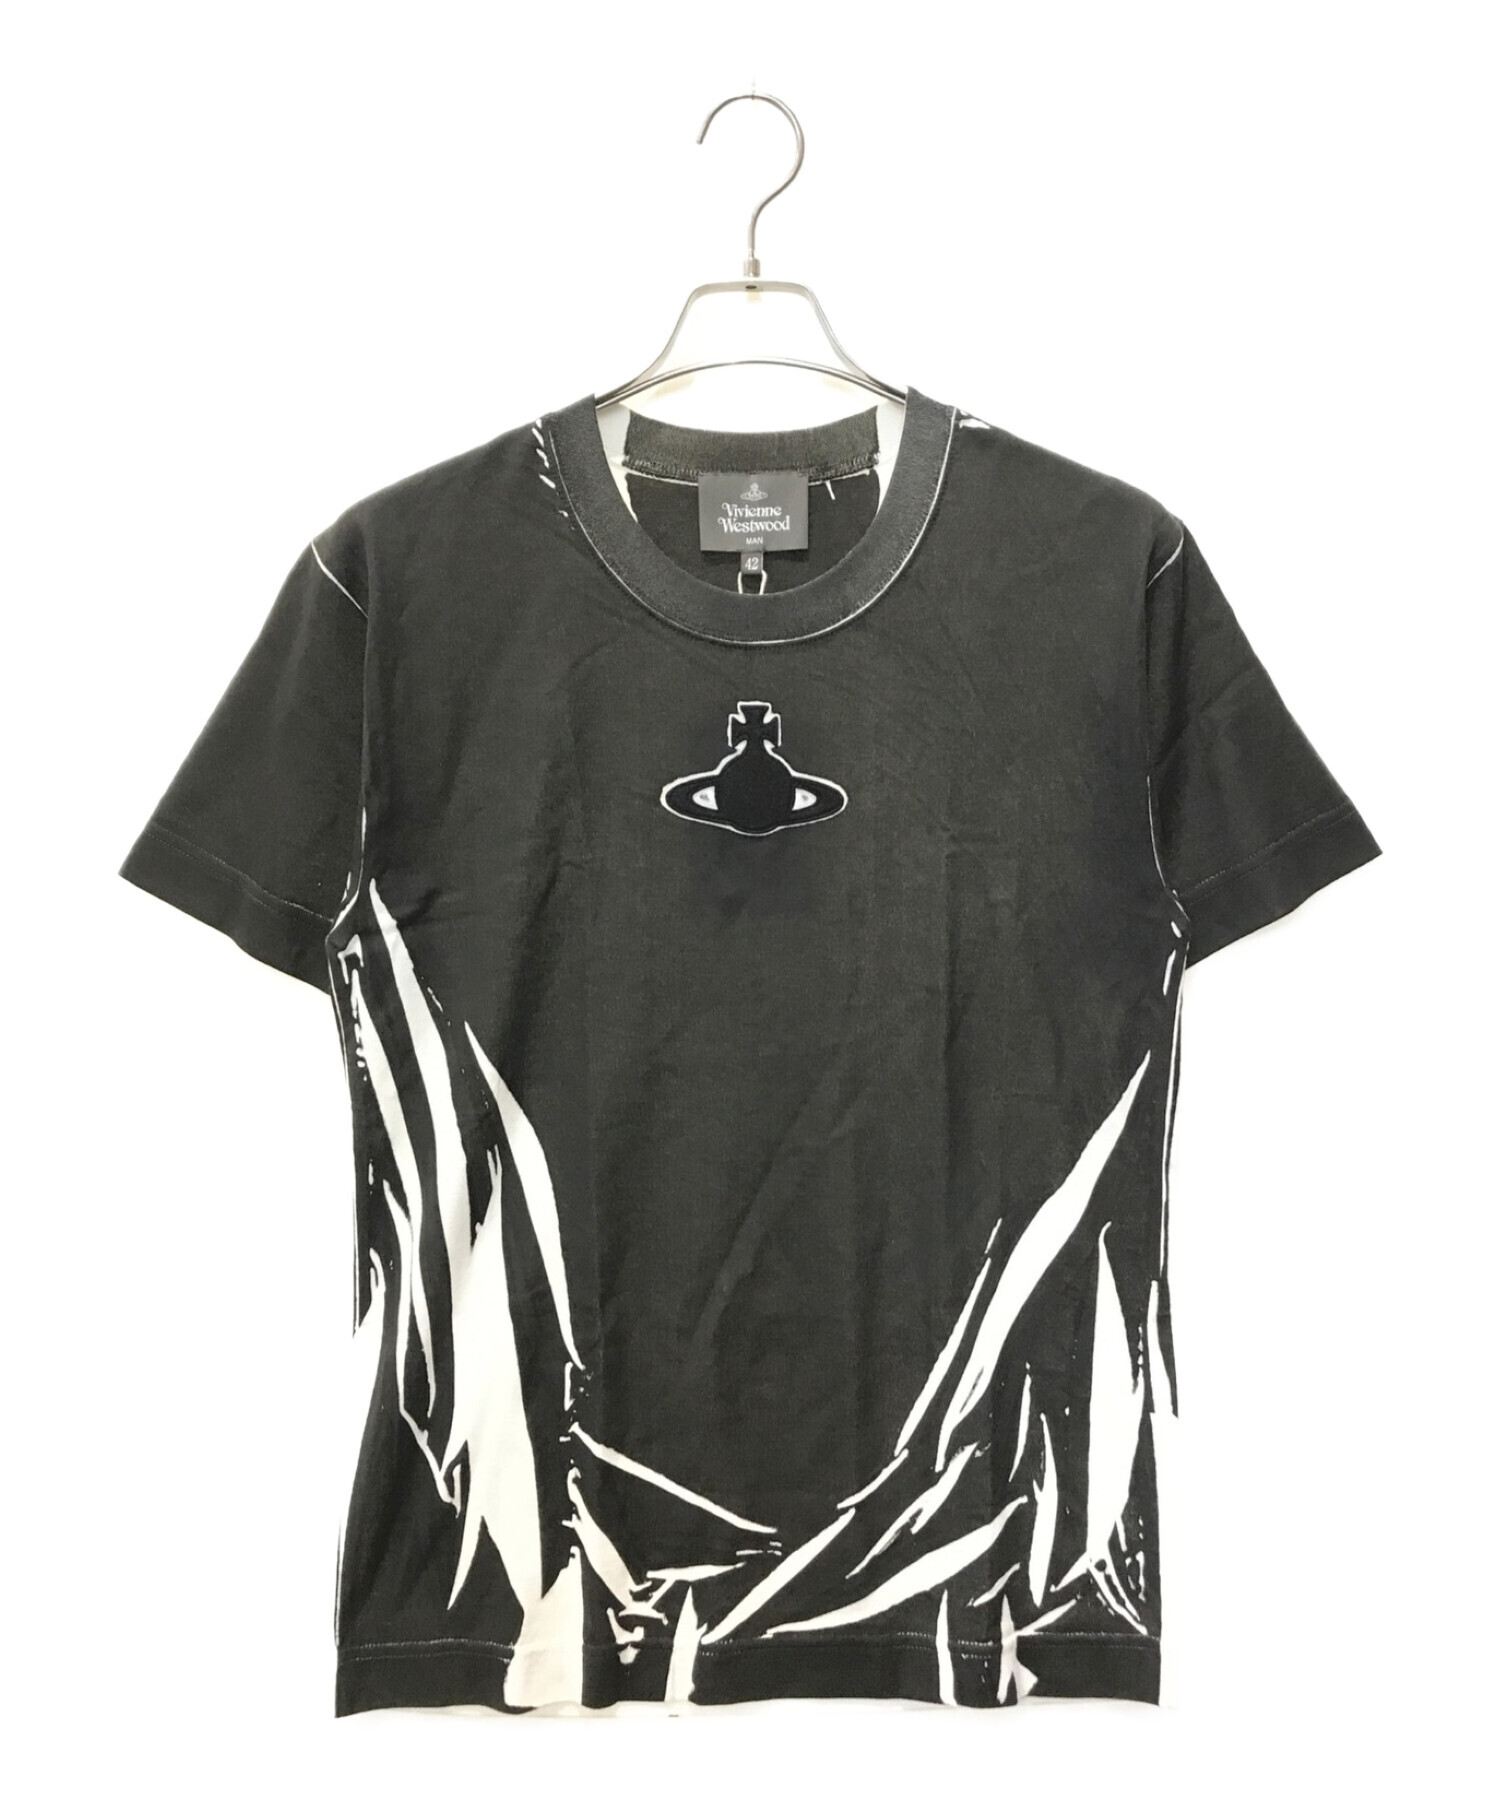 Vivienne Westwood man (ヴィヴィアン ウェストウッド マン) ビッグオーブ刺繍Tシャツ ホワイト×ブラック サイズ:42 未使用品